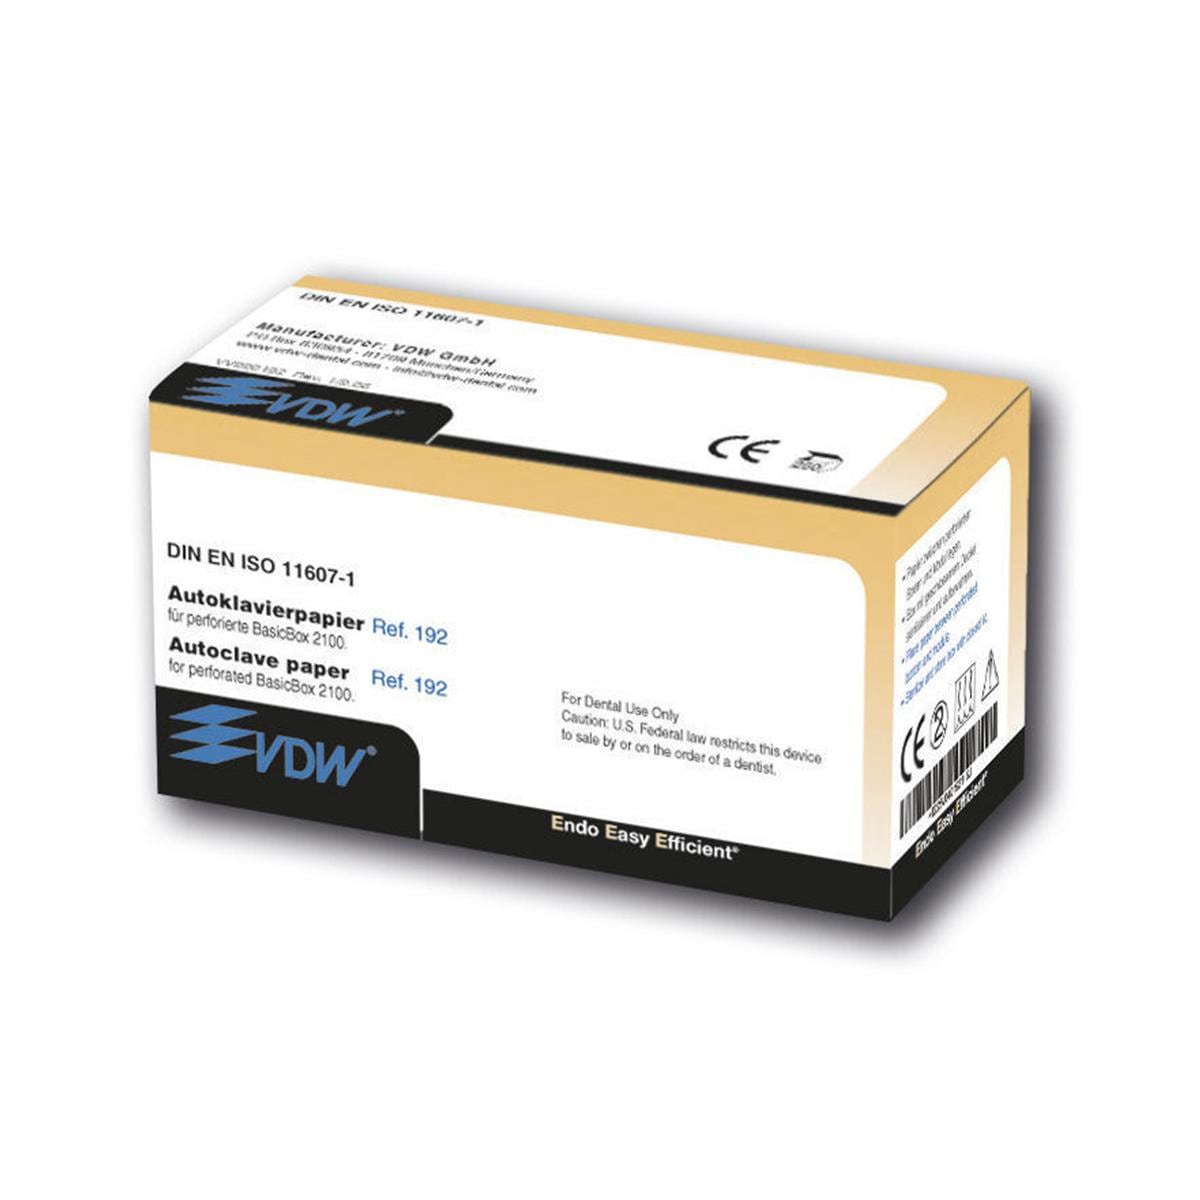 Endo-Box - sterilisatiepapier - Basic-Box, 250 stuks